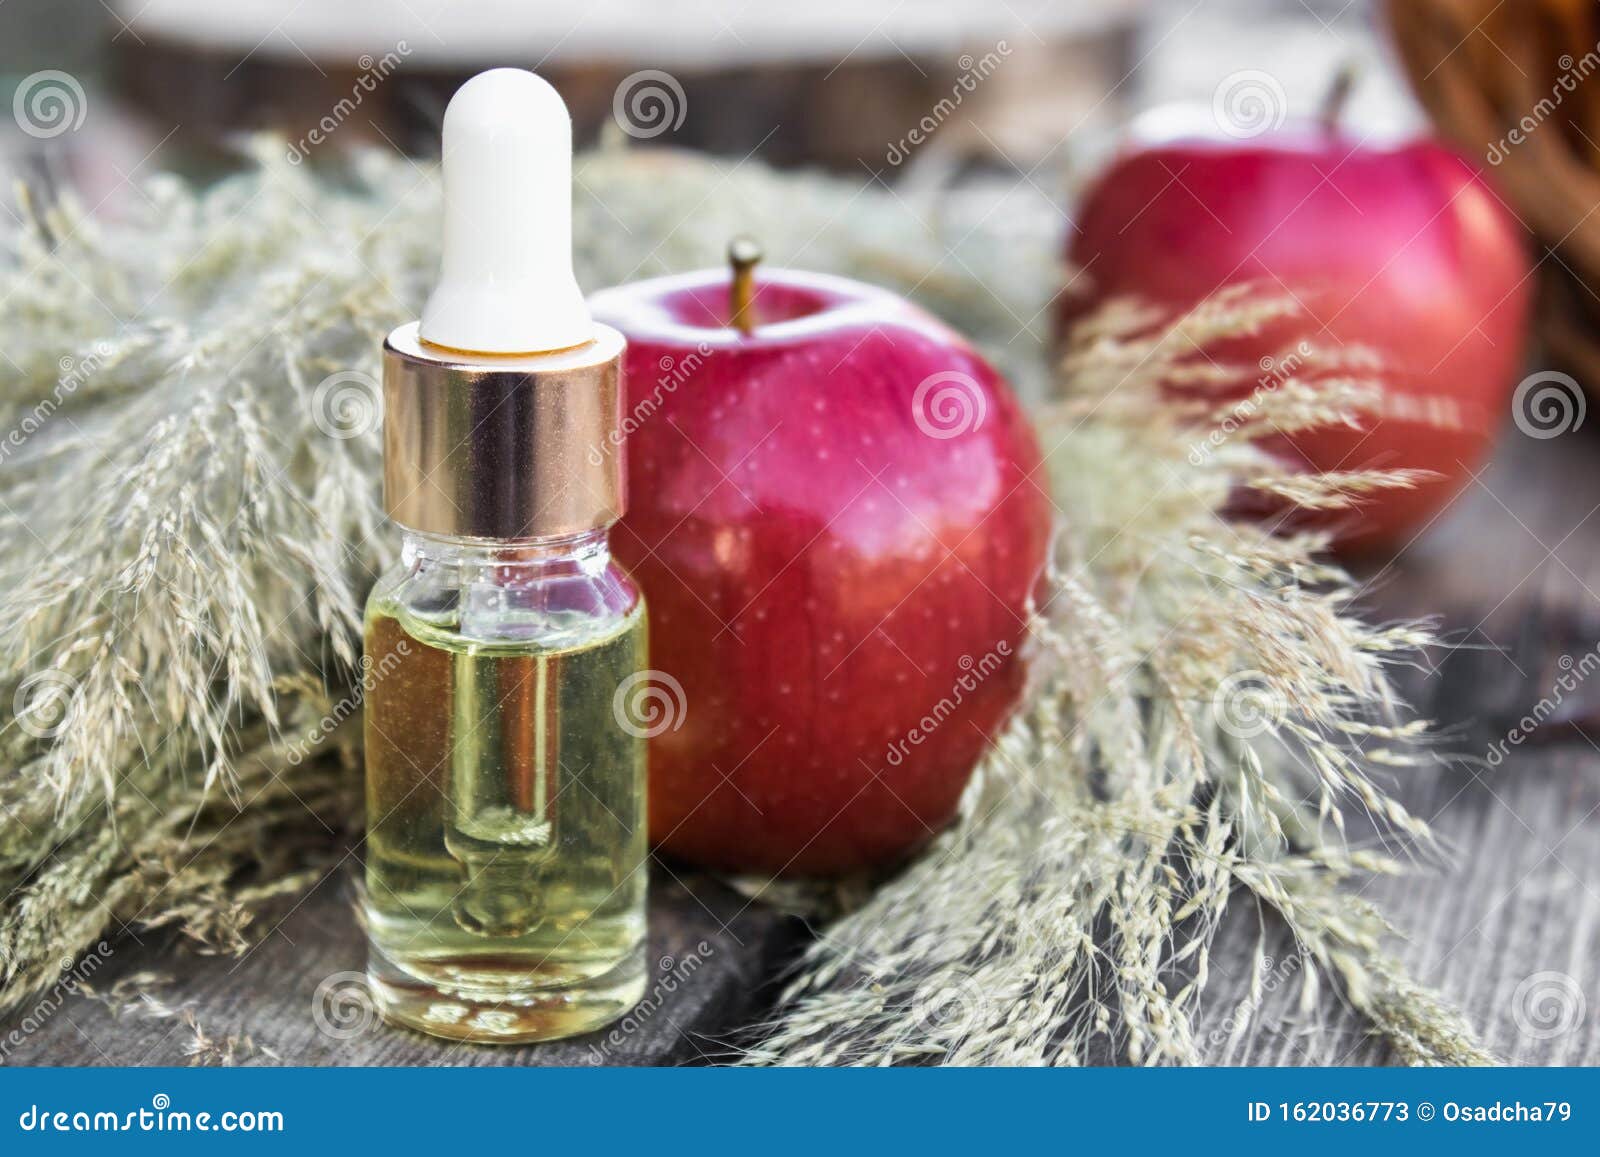 Glass bottle of apple essential oil near fresh apples on a wooden